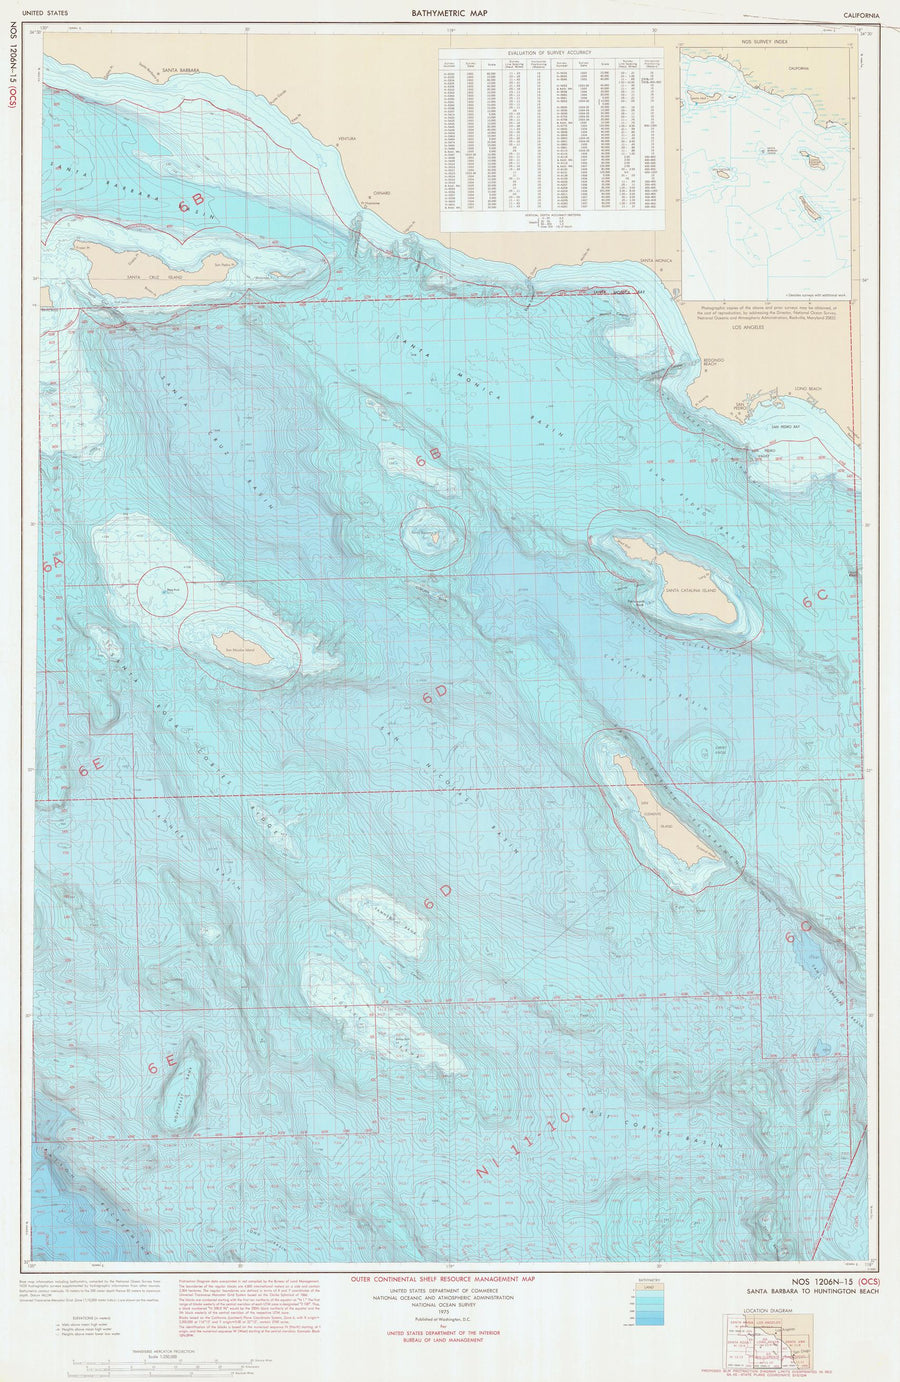 Santa Barbara to Huntington Beach Bathymetric Fishing Map - 1975